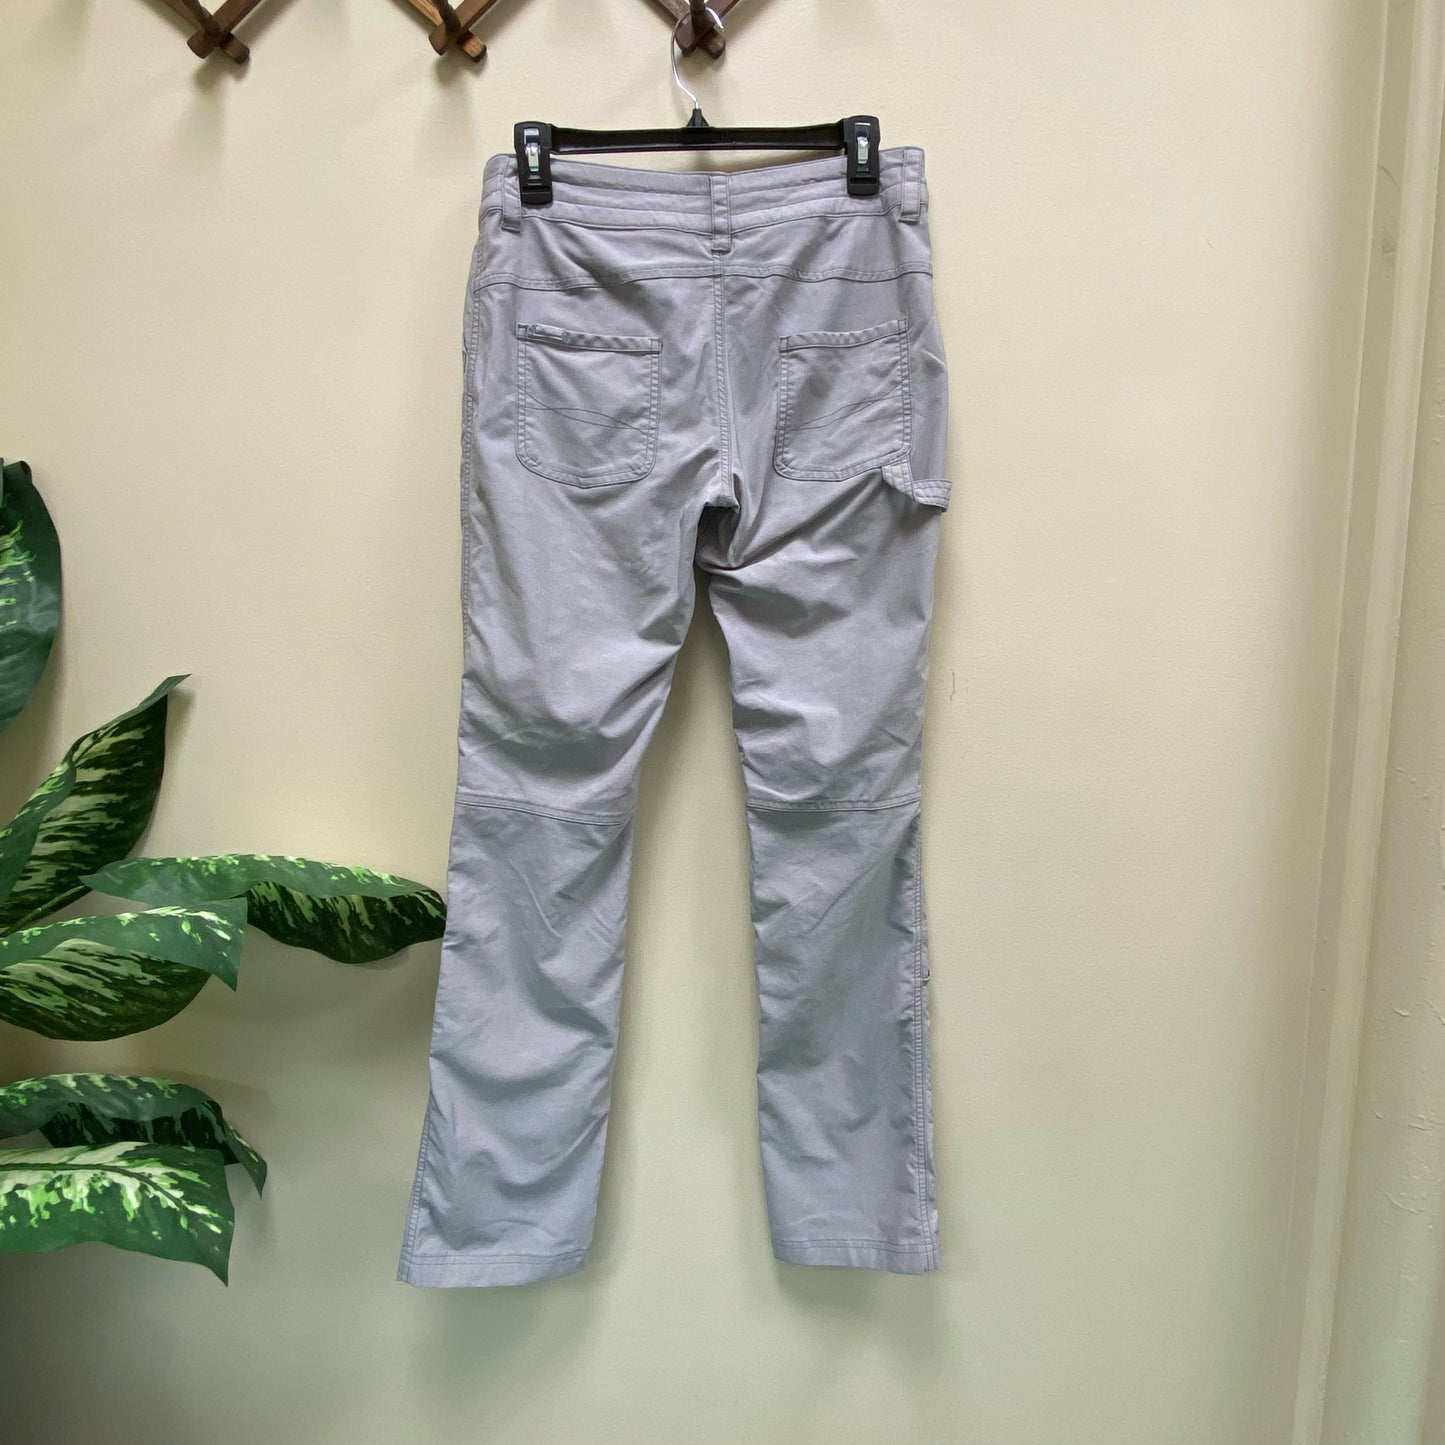 Columbia Pilsner Peak Gray Hiking Women’s Pants - Size 6